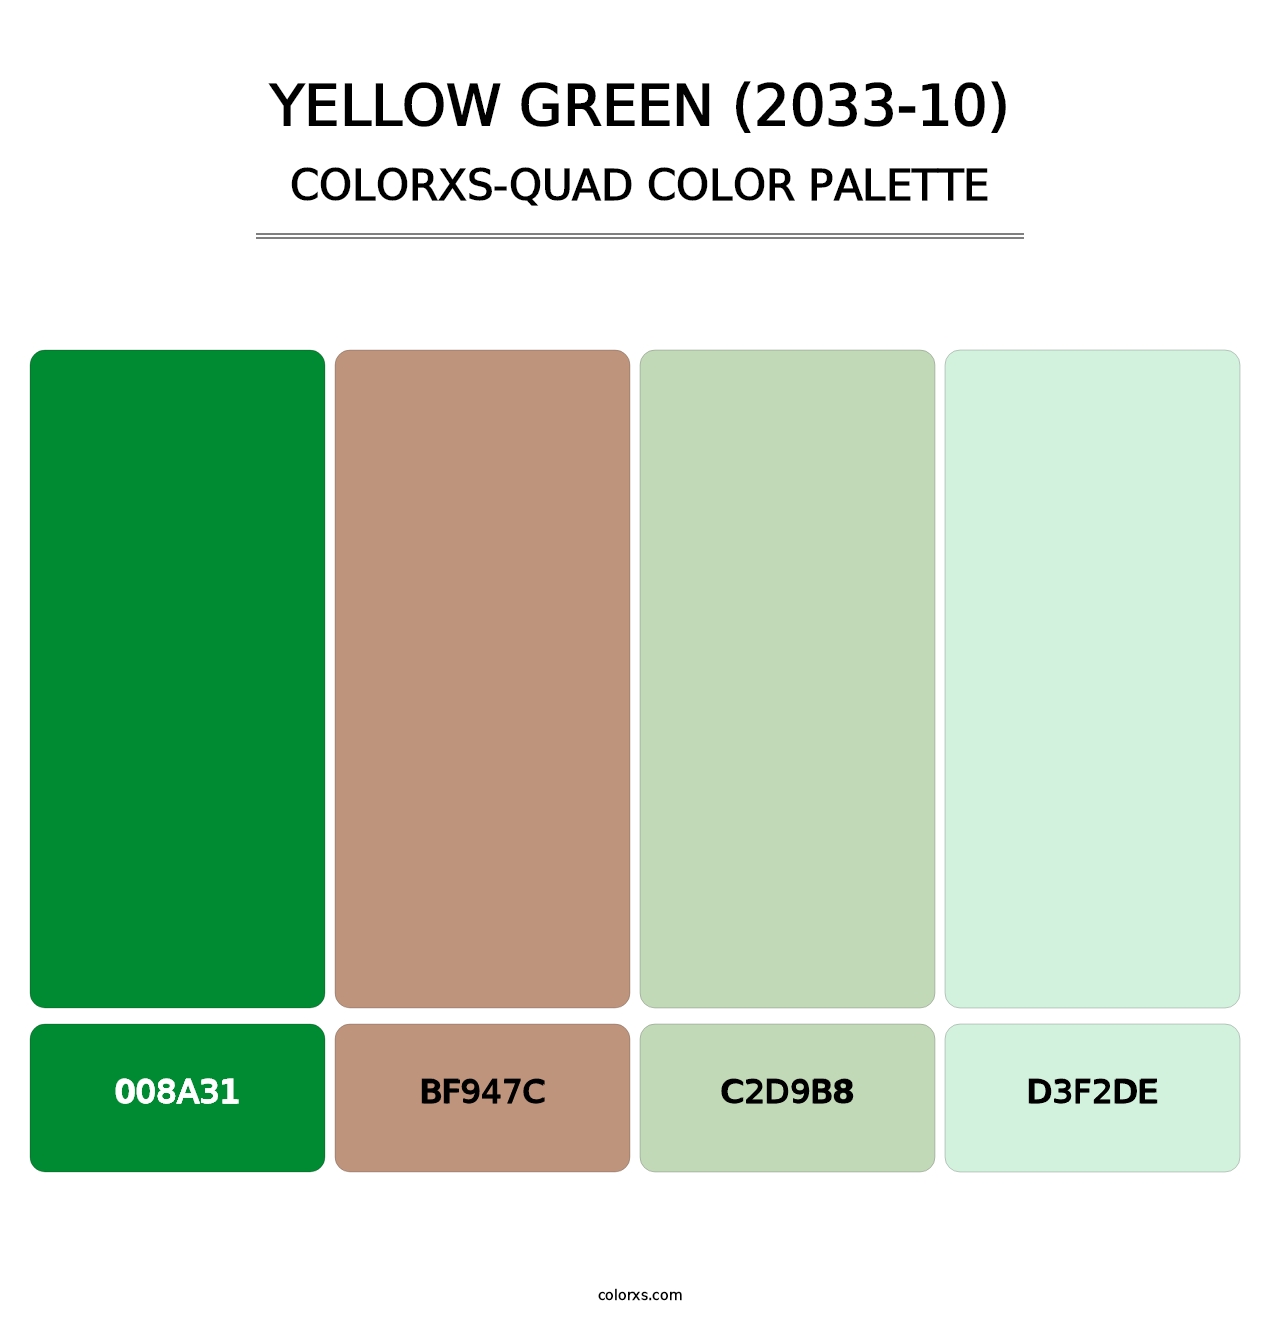 Yellow Green (2033-10) - Colorxs Quad Palette